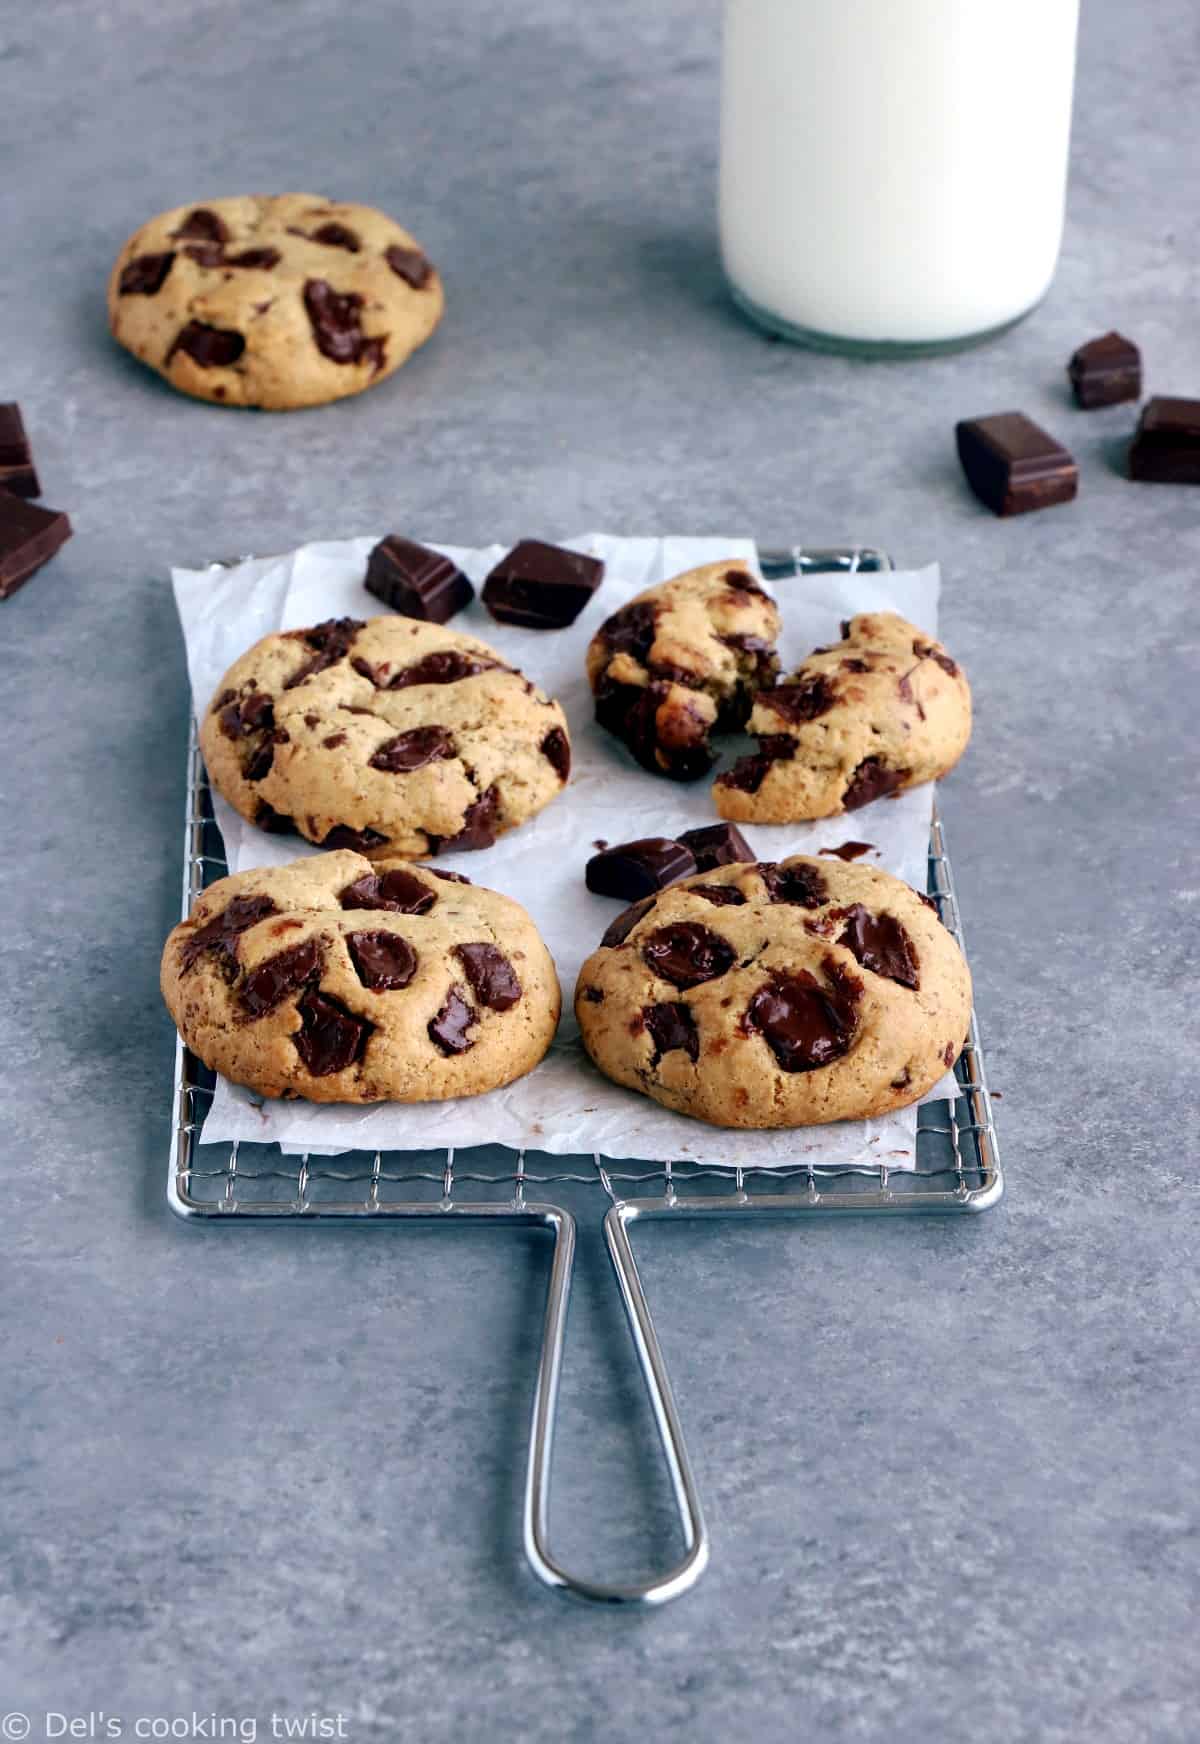 Perfect Vegan Chocolate Chip Cookies